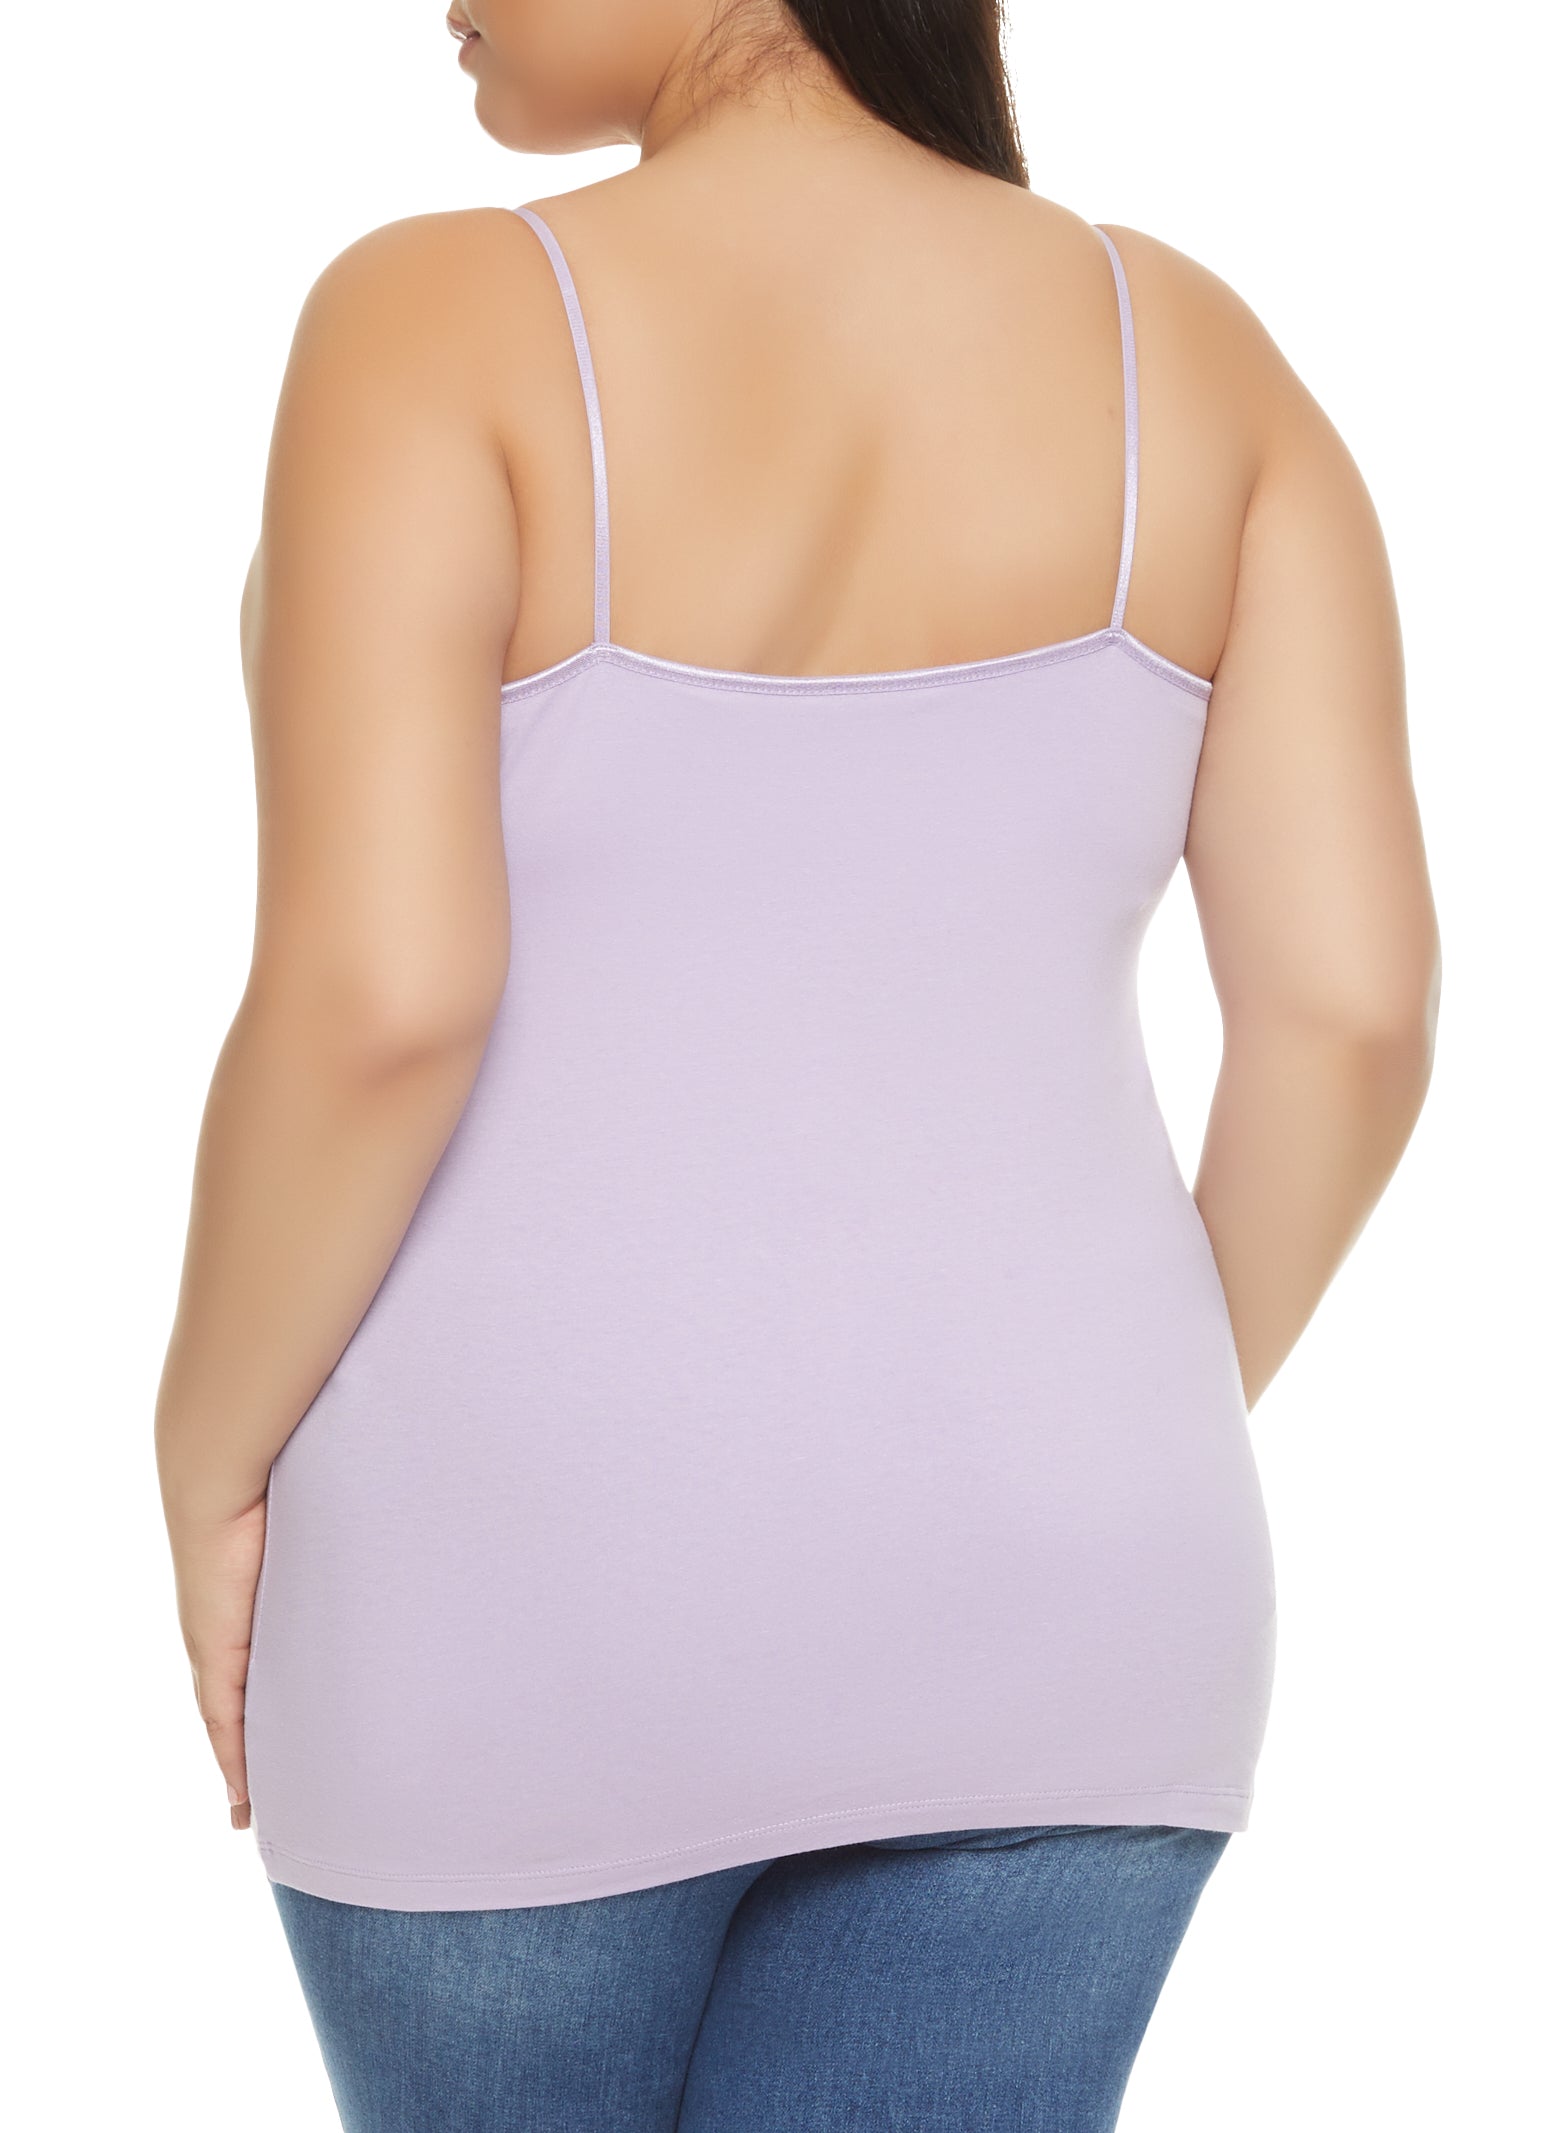 Charmo Women Plus Size Cotton Tank Top with Shelf Bra Adjustable Wider  Strap Camisole Basic Undershirt